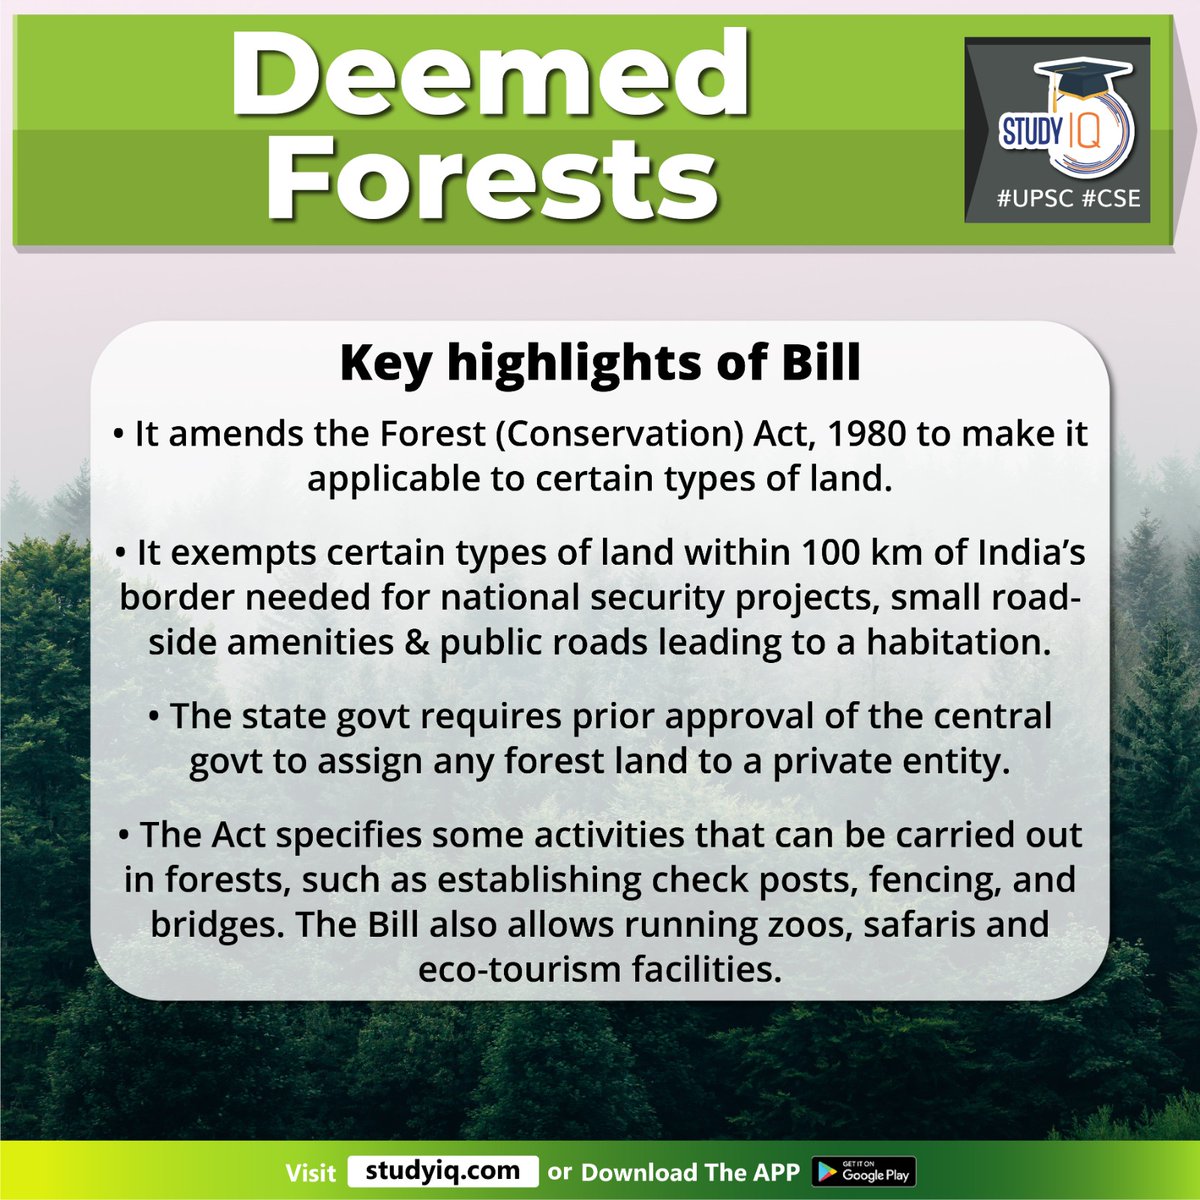 Deemed Forests

#deemedforests #odisha #whyinnews #forestconservationact #godavarmancase #forestbill #forestact #typesofland #india #nationalsecurityproject #centralgovt #ecotourismfacilities #upsc #cse #ips #ias #safaris #zoos